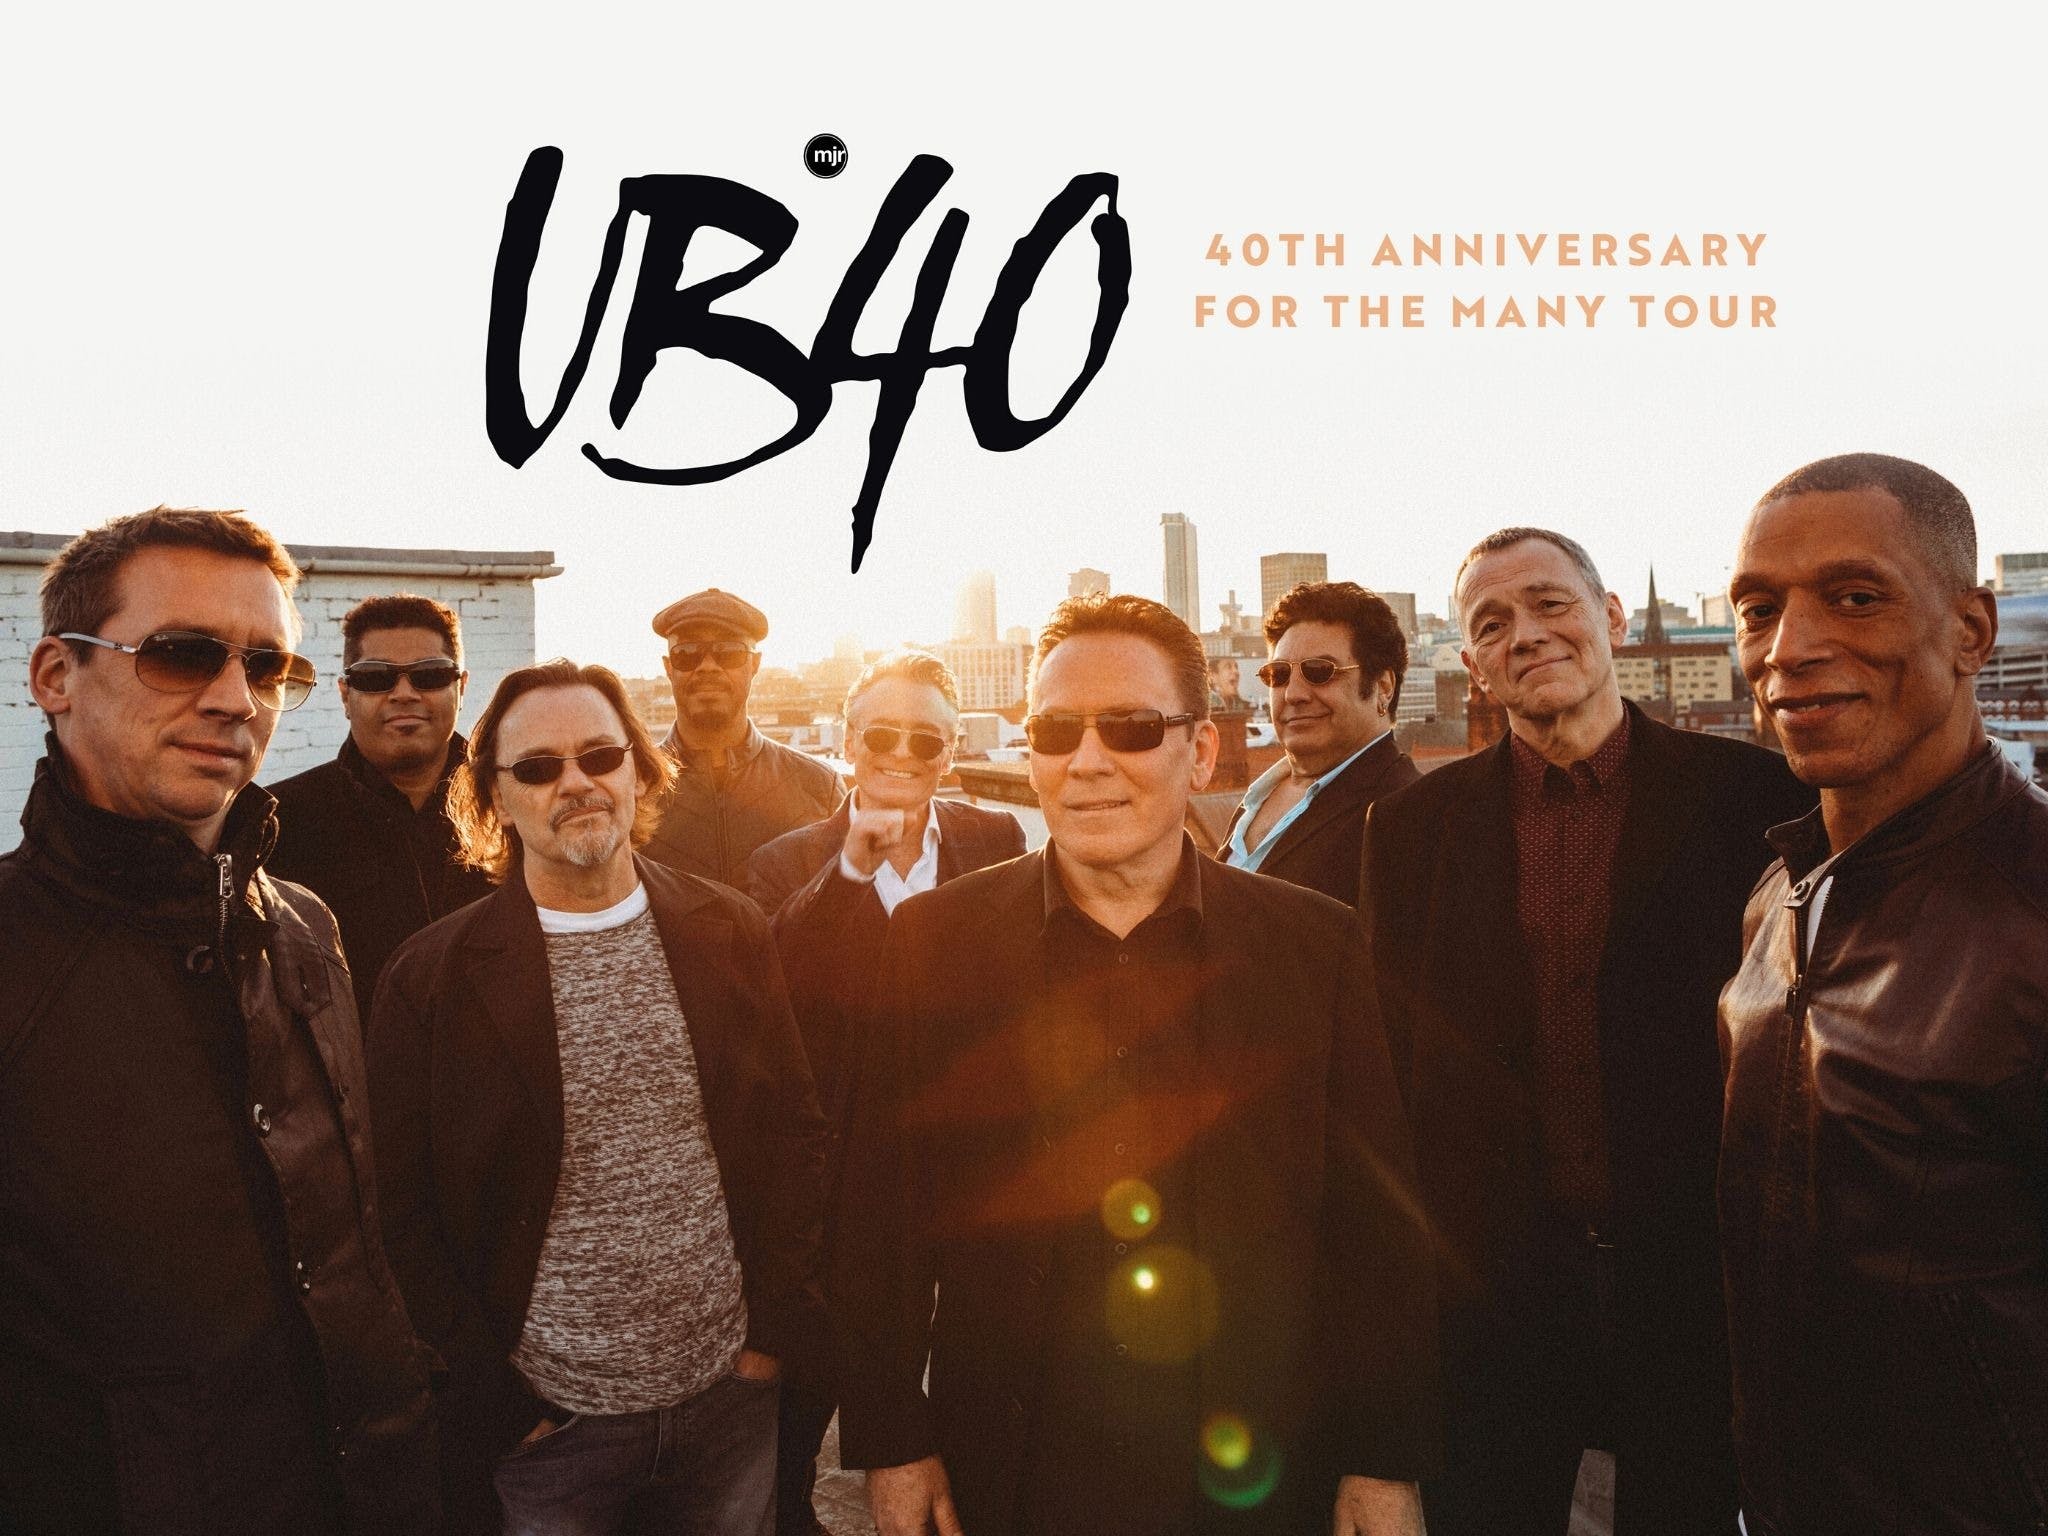 UB40 40th Anniversary Tour - Accommodation Brunswick Heads